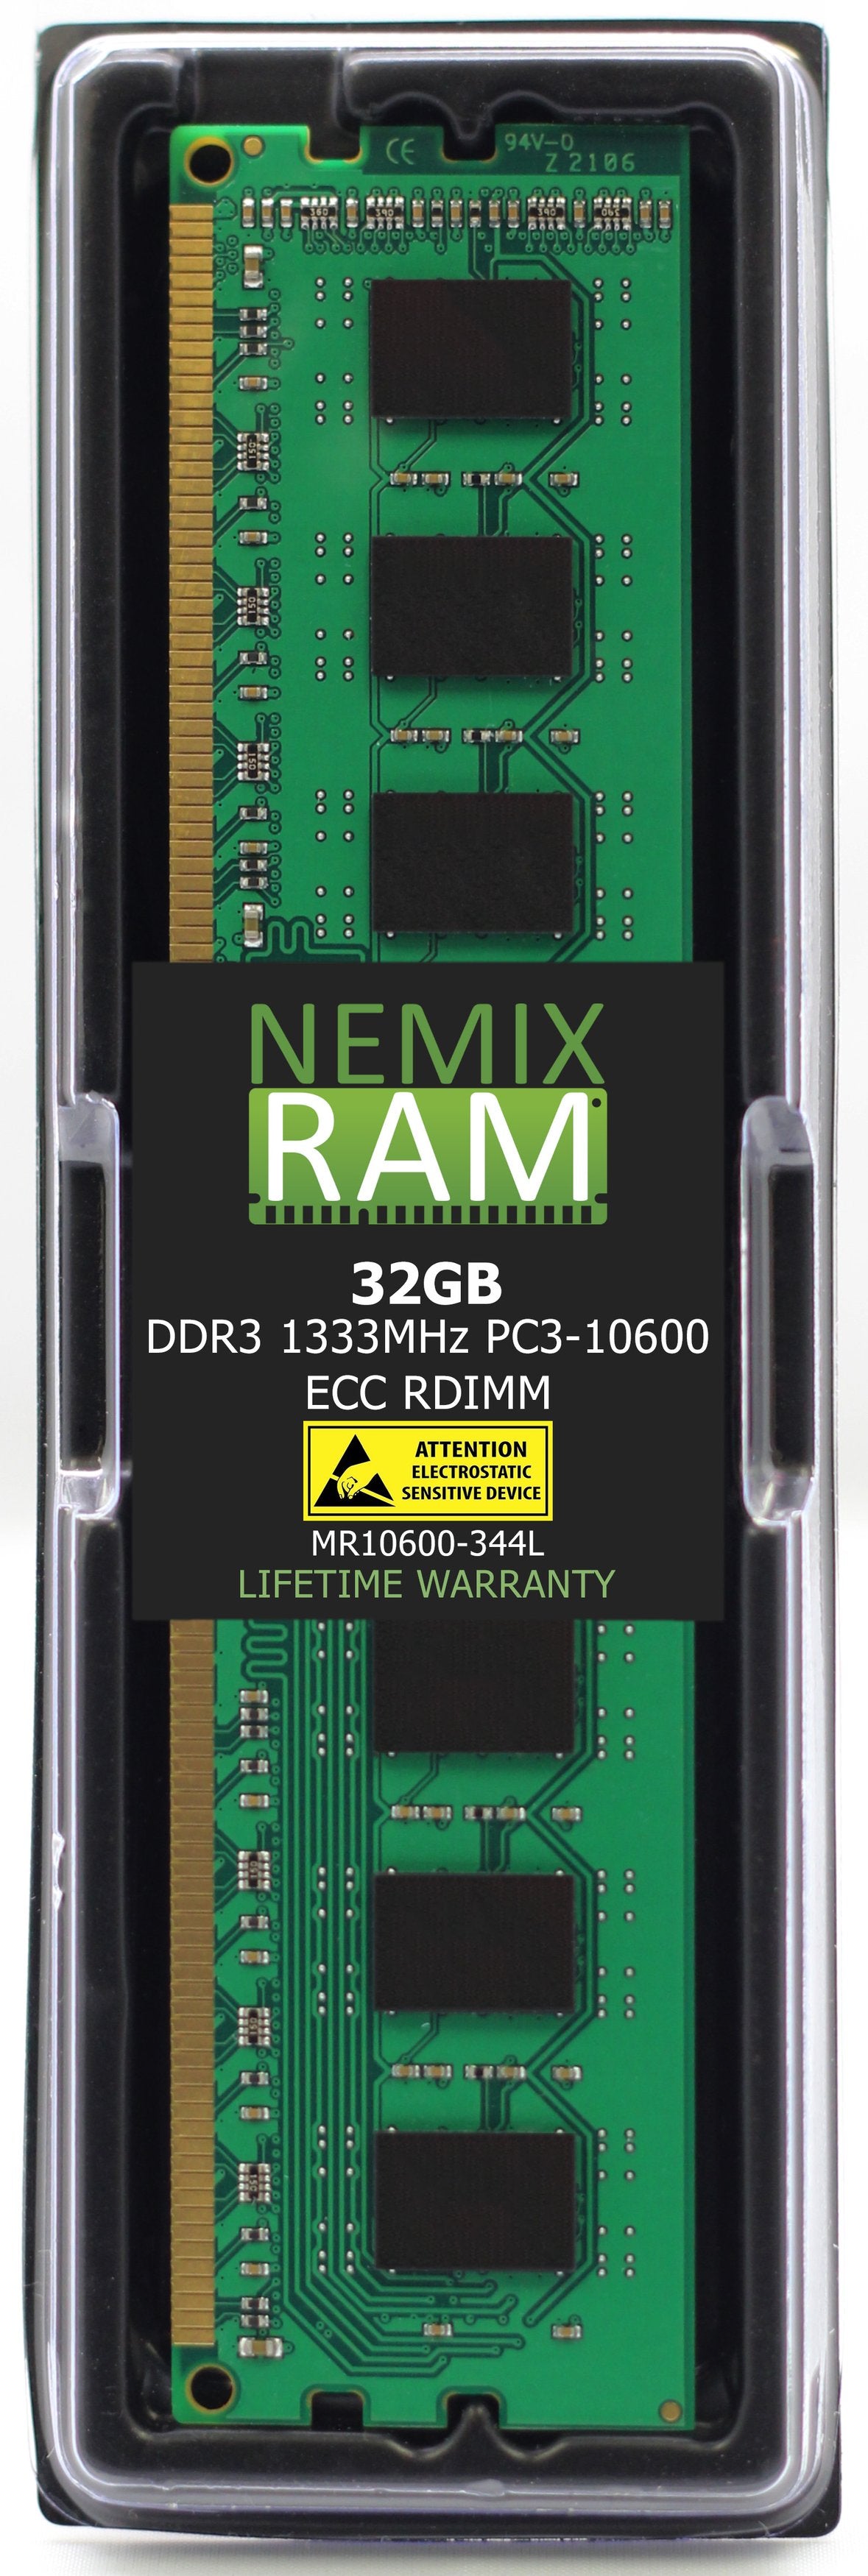 NEC Express5800 T120e Memory Module N8102-559F 32GB DDR3 1333MHZ PC3-10600 RDIMM